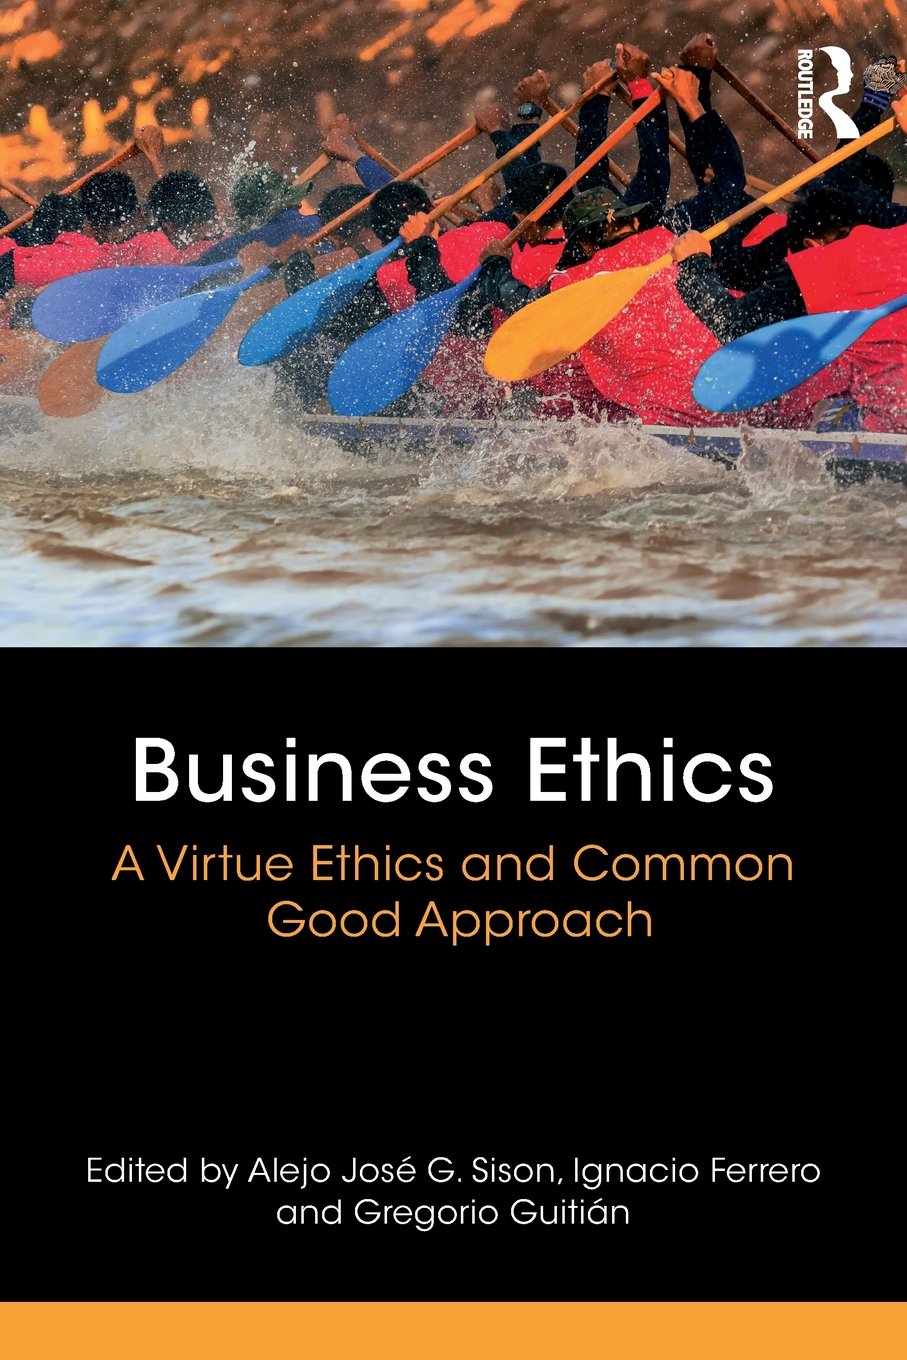 Imagen de portada del libro Business Ethics